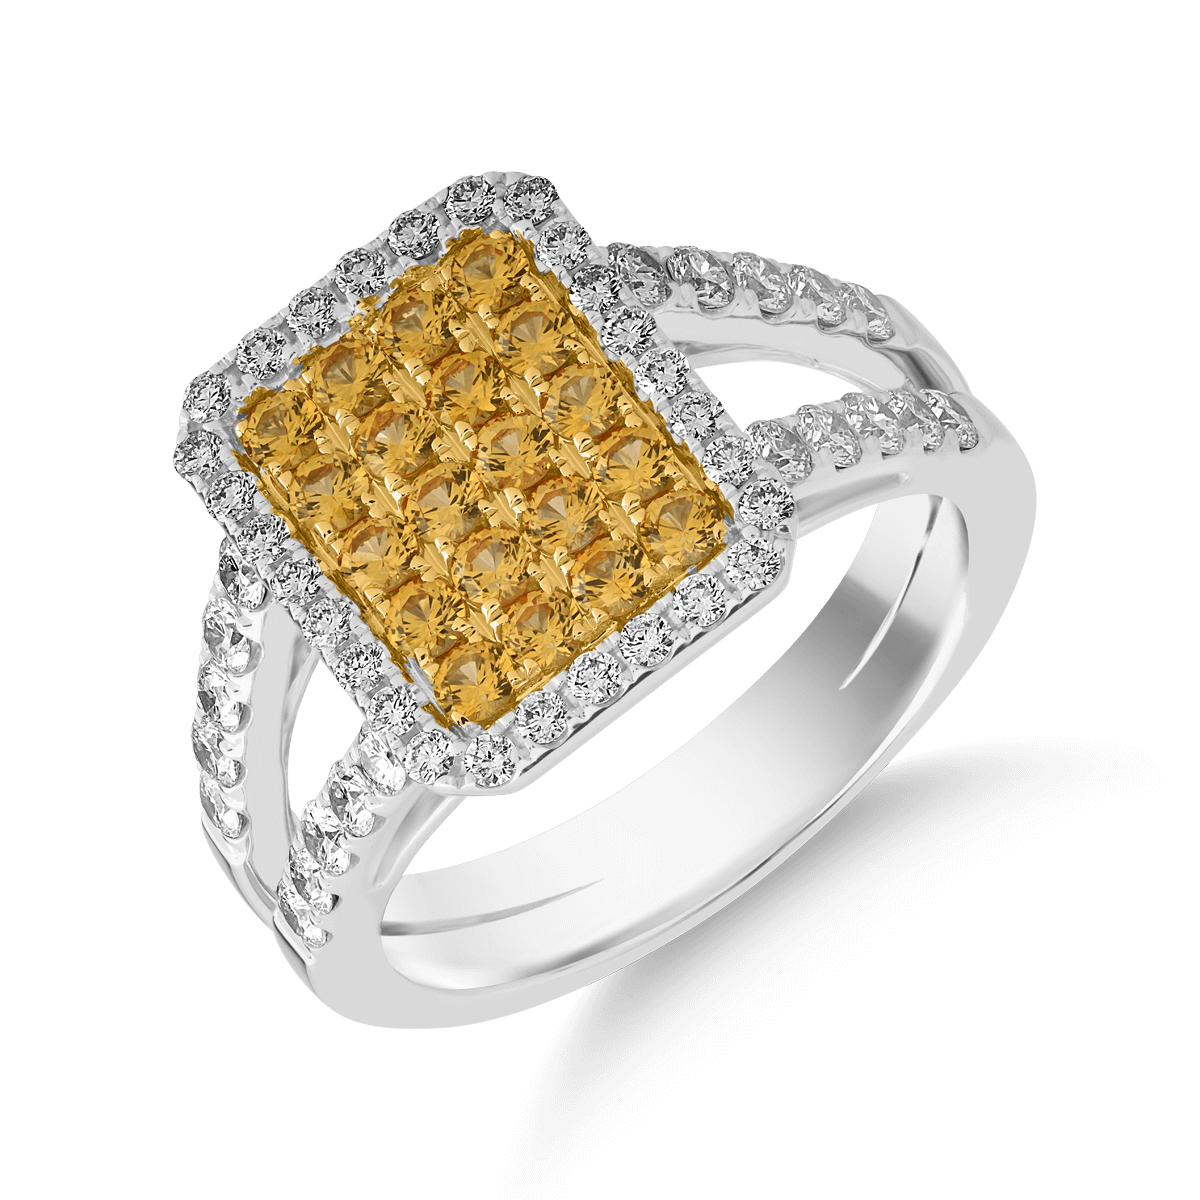 Inel din aur alb/galben de 18K cu safire galbene de 0.68ct si diamante de 0.7ct